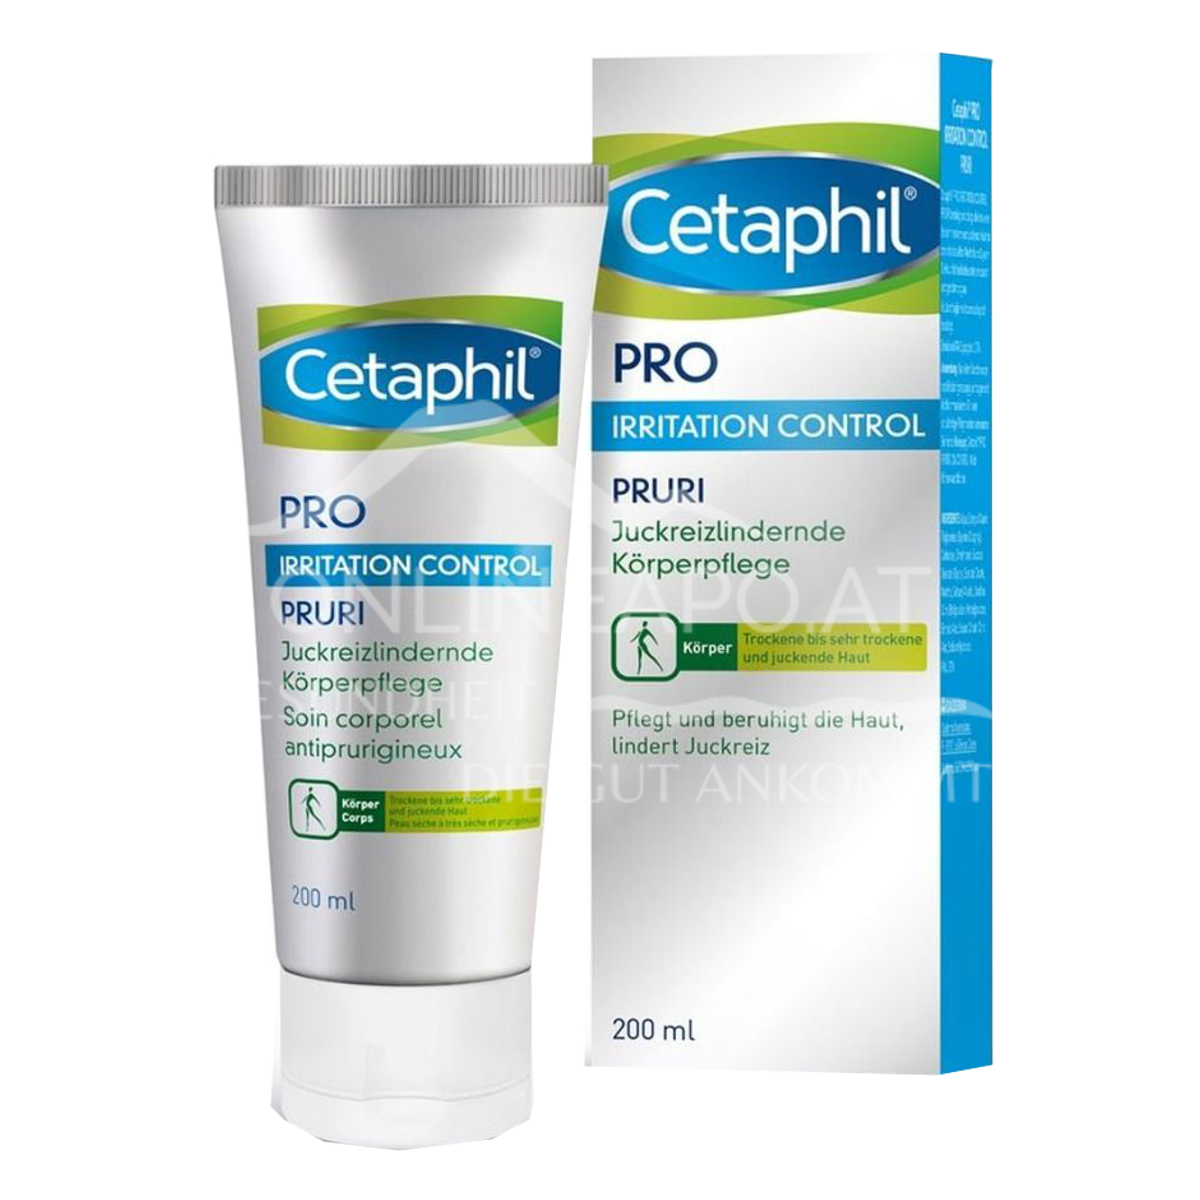 Cetaphil® PRO IRRITATION CONTROL PRURI Juckreizlindernde Körperpflege